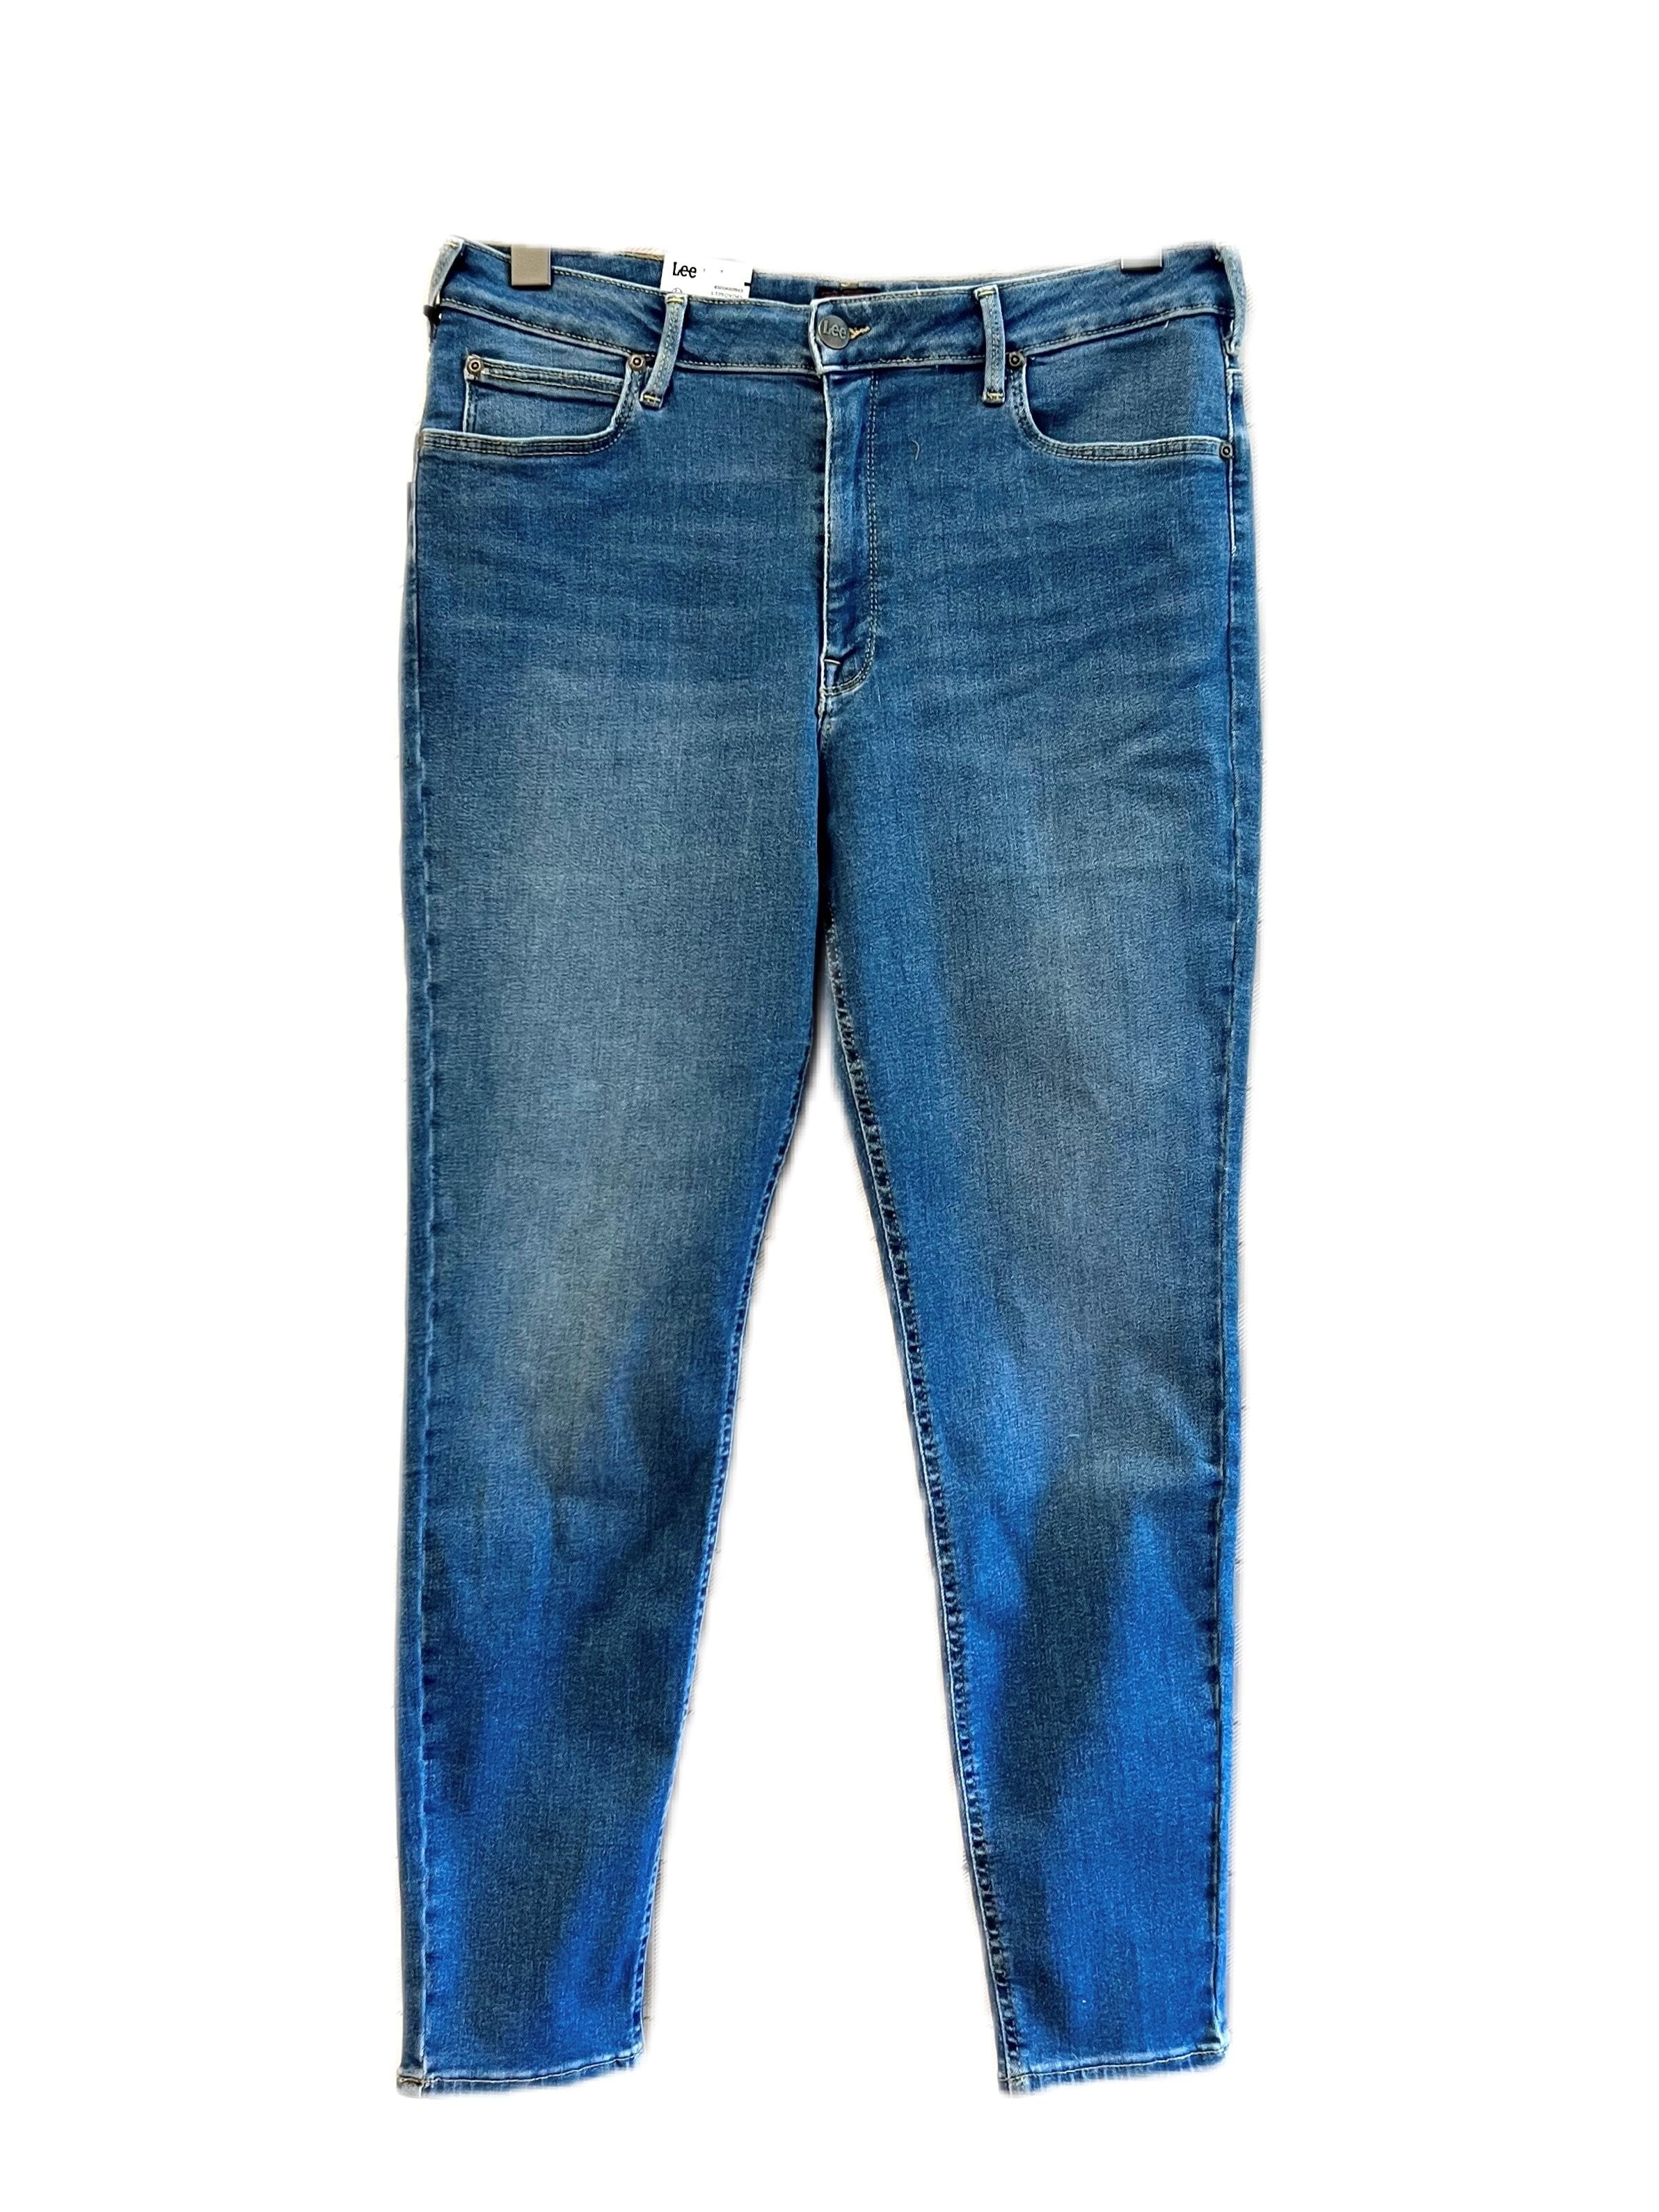 Skinny High Waist Jeans - Meteoric